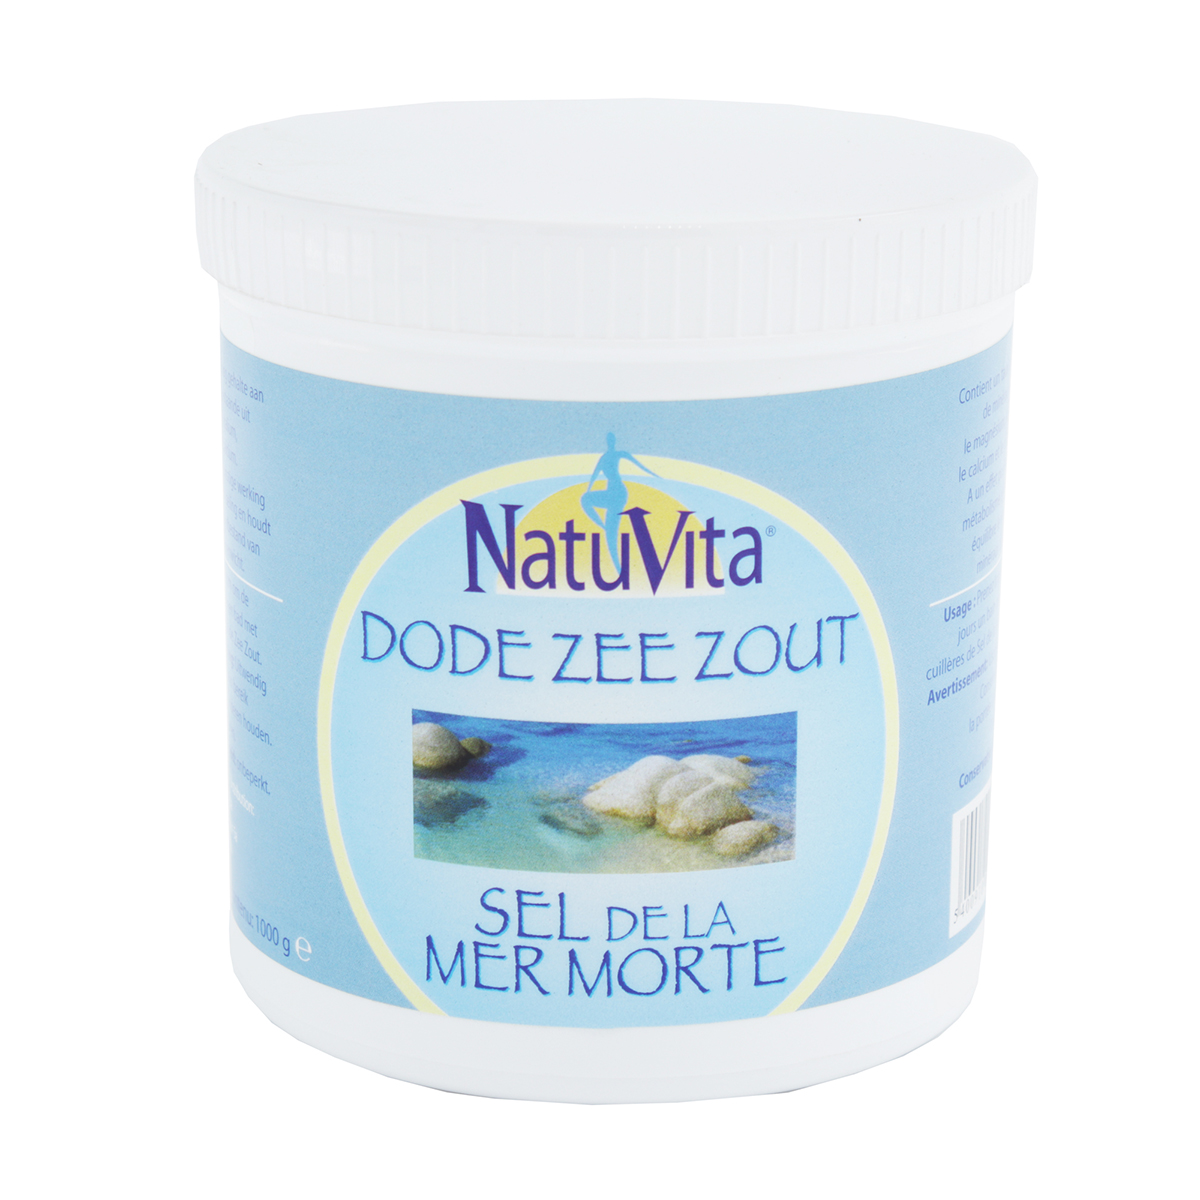 Natuvita Dode zee zout pot 1kg